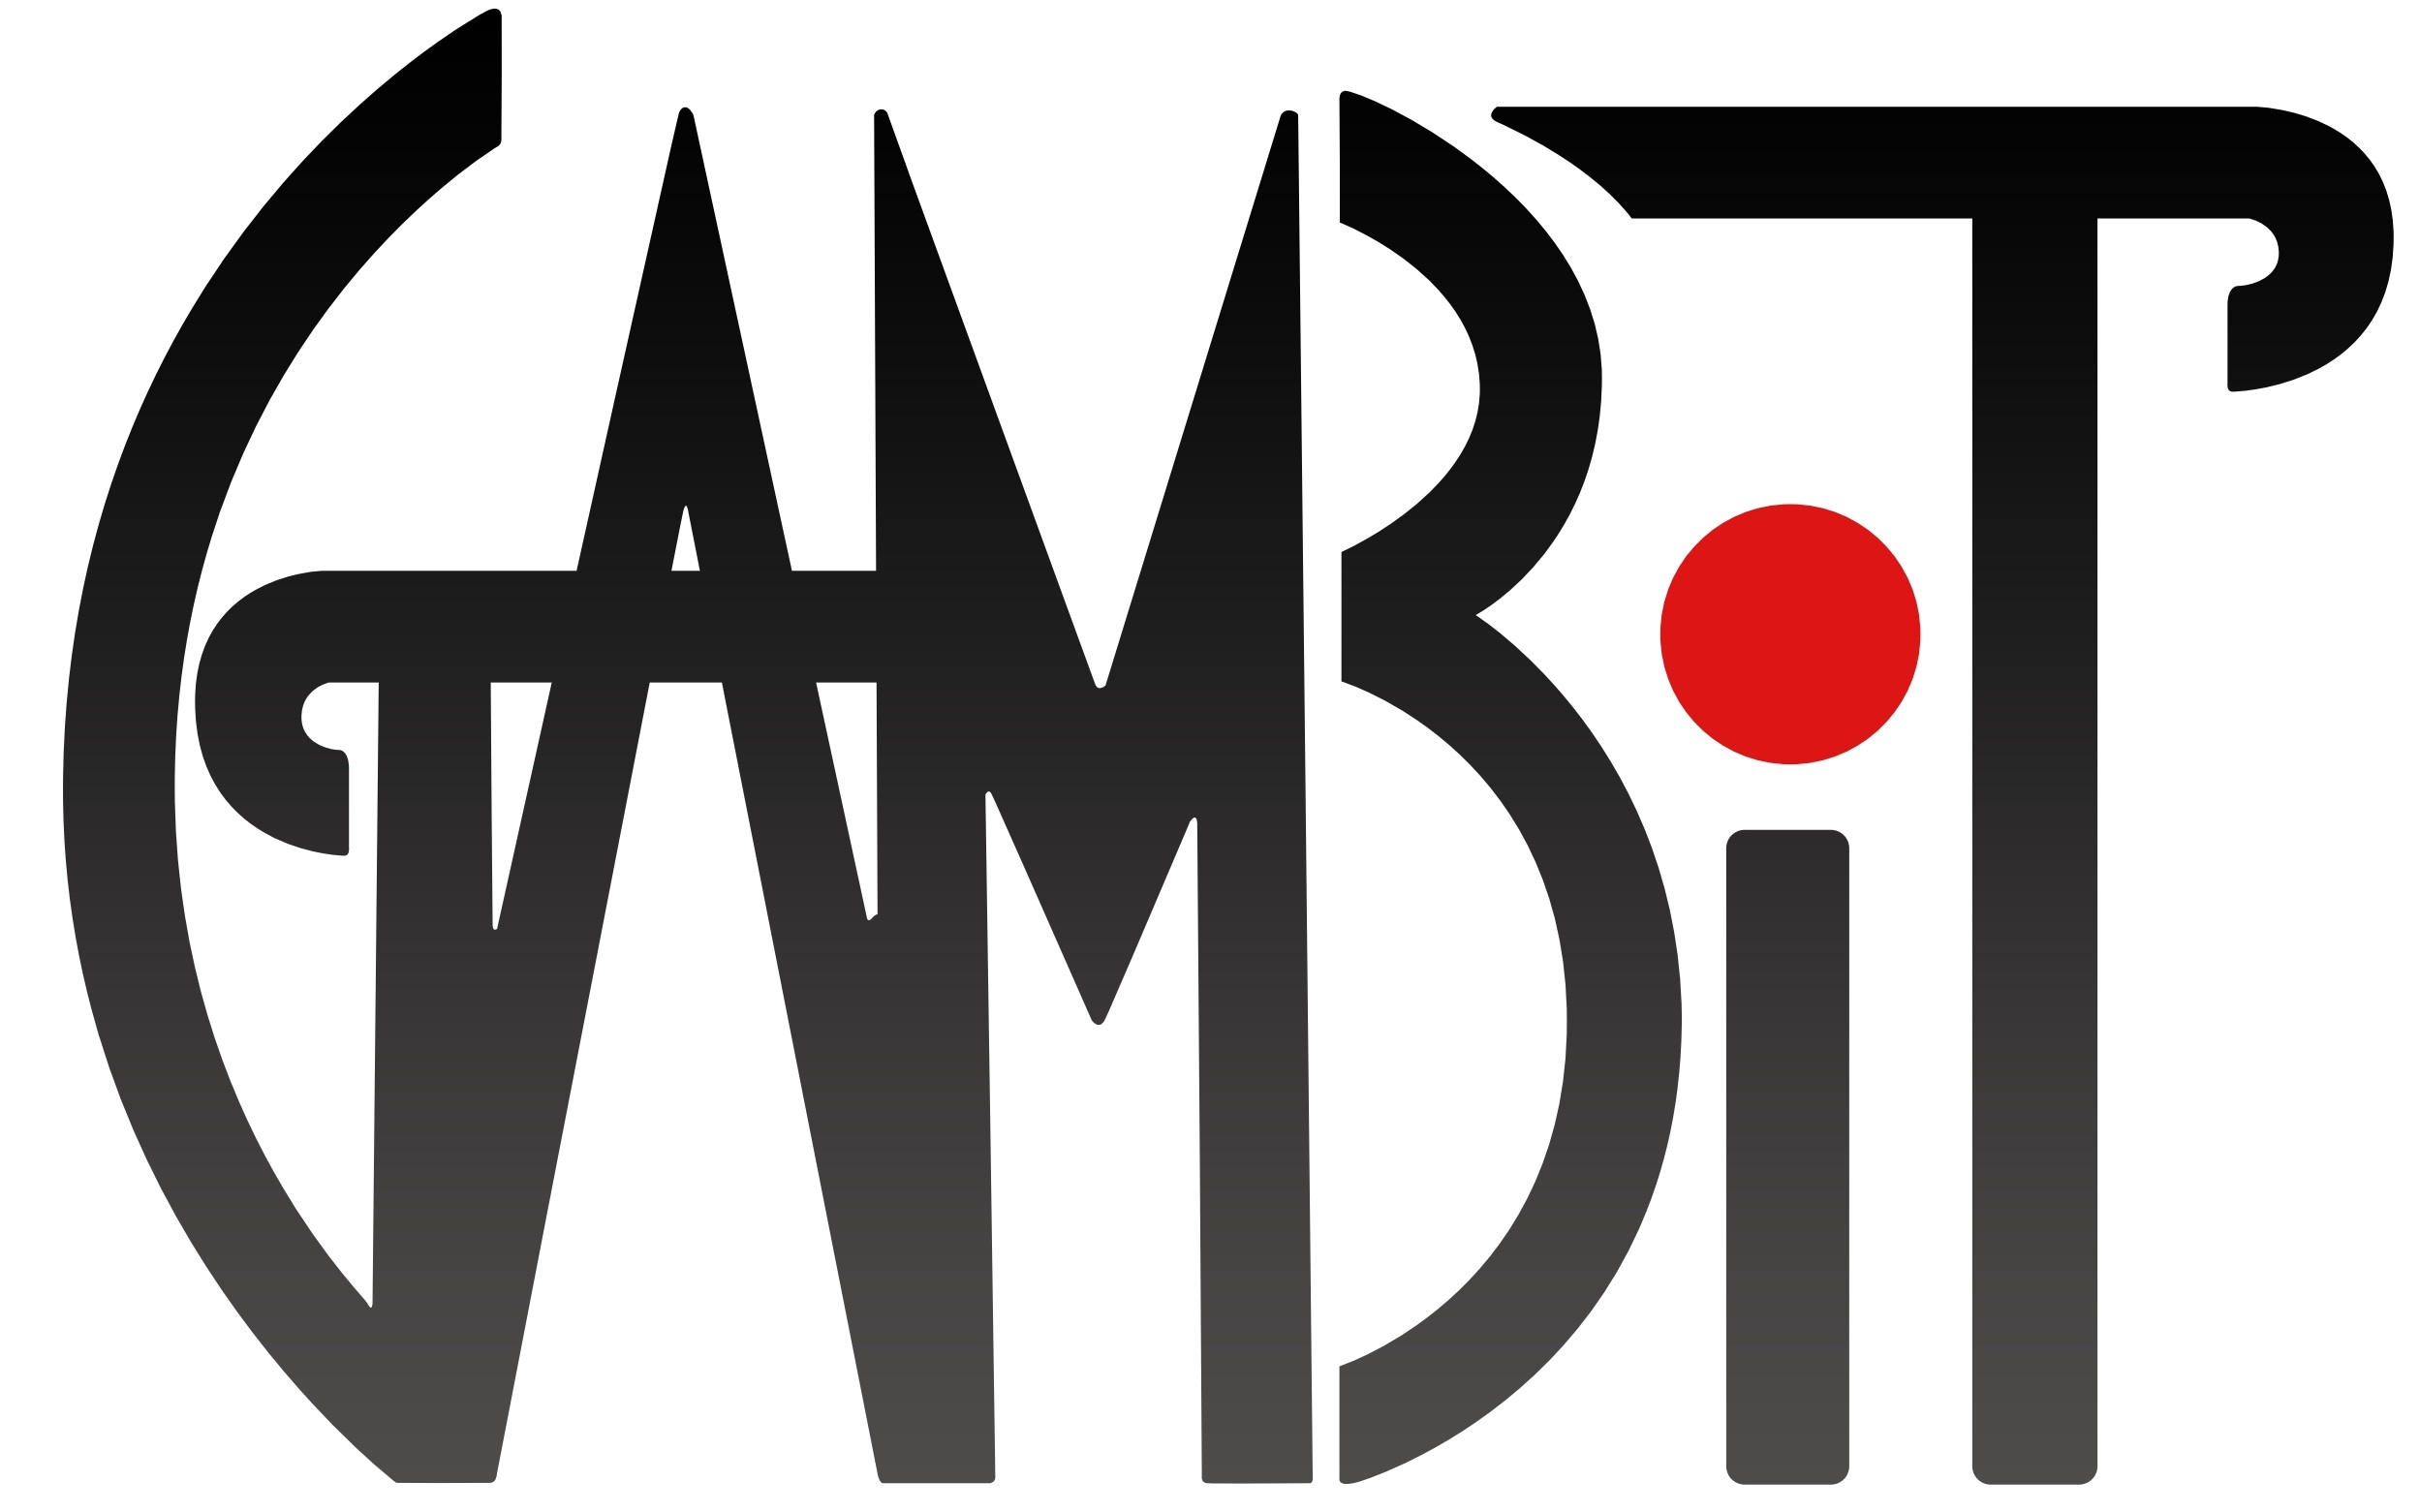 GAMBIT Logo.jpg 83abe9bf97c6a45e2bde84a18c4fef16